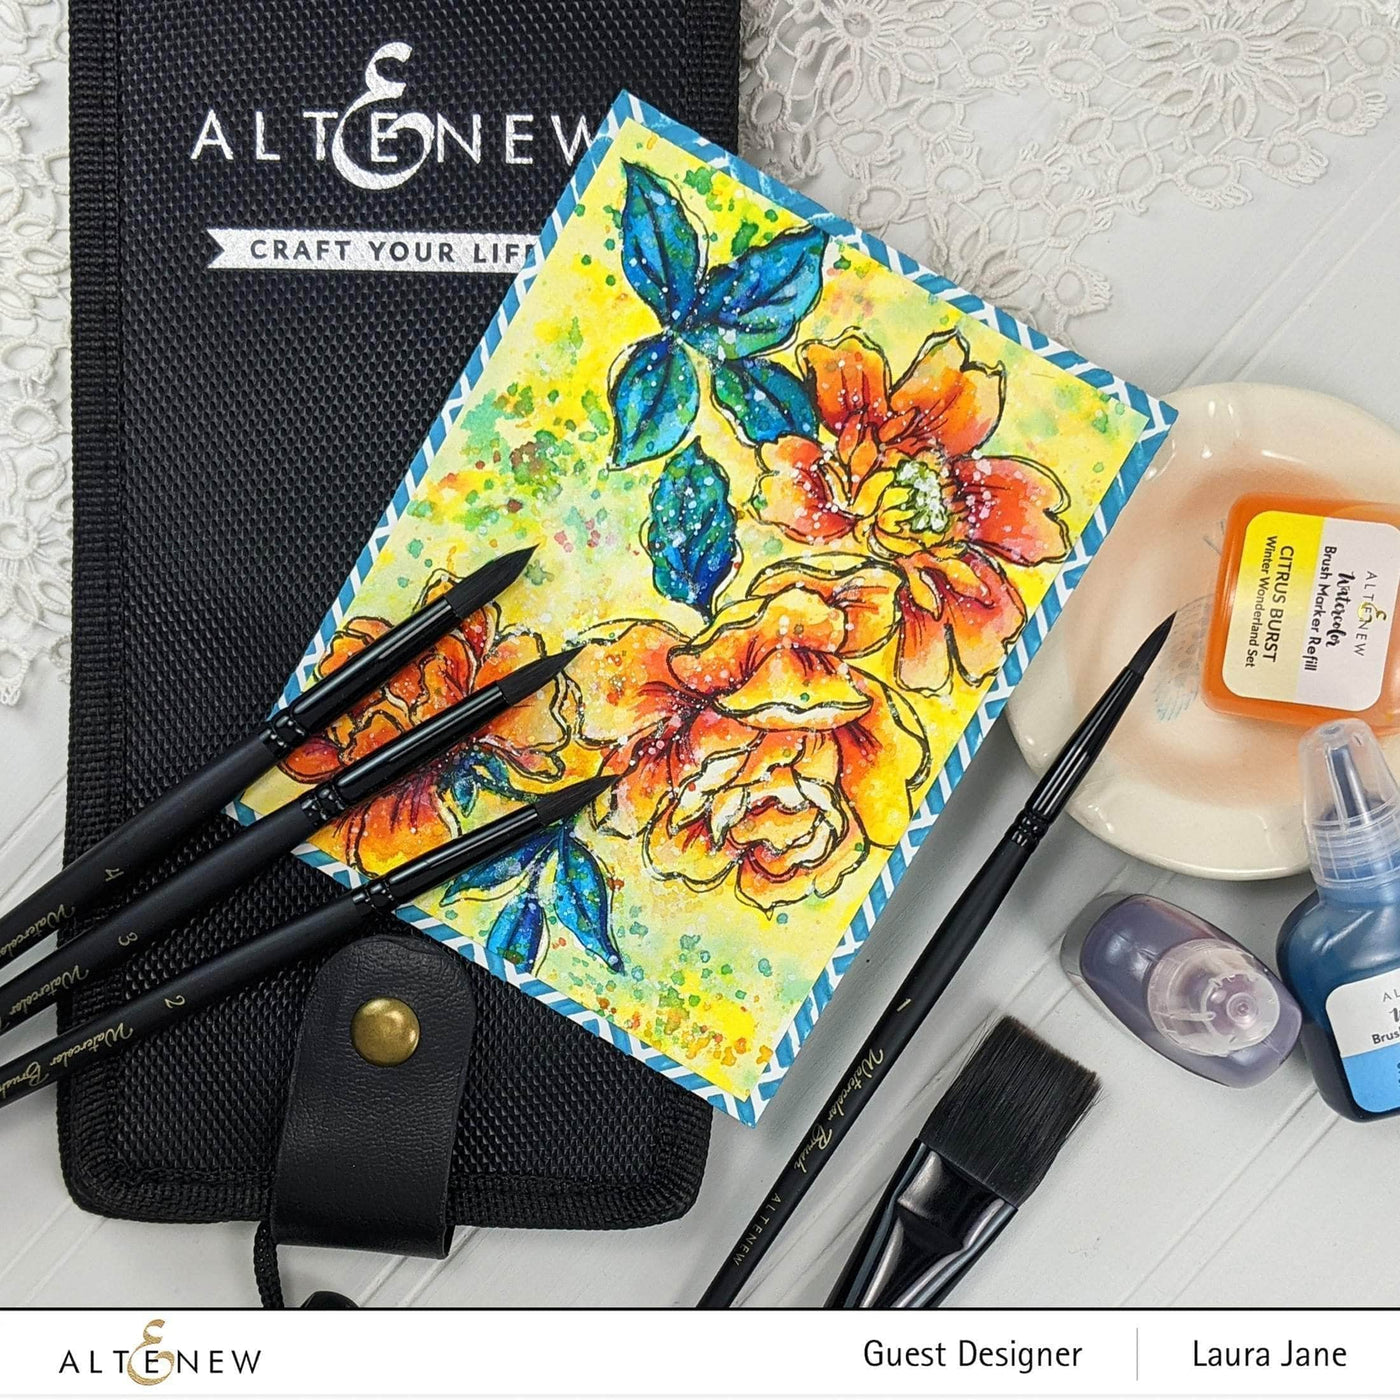 Altenew Watercolor Coloring Book ALT3858